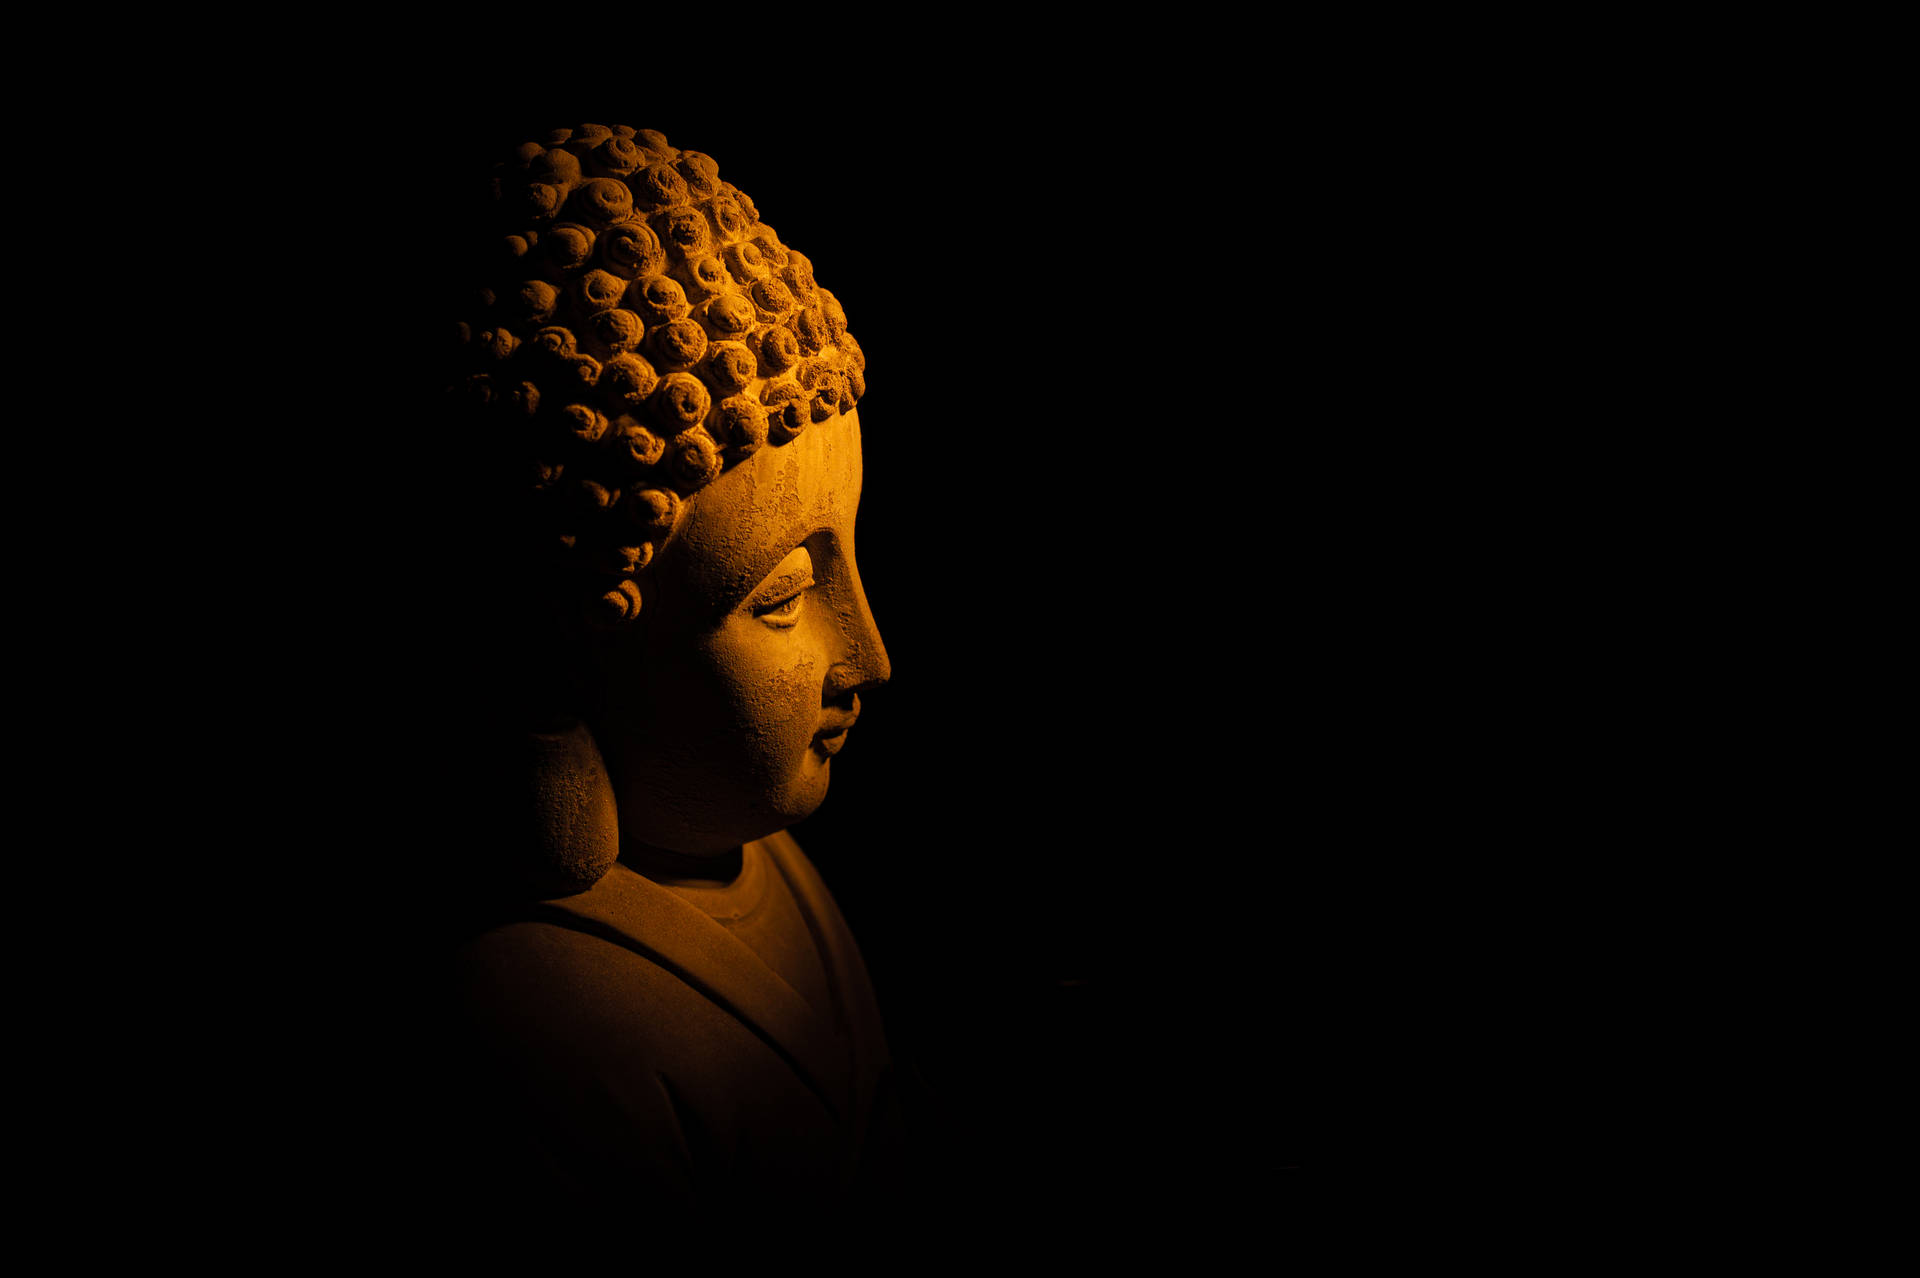 Buddha 4785X3184 Wallpaper and Background Image